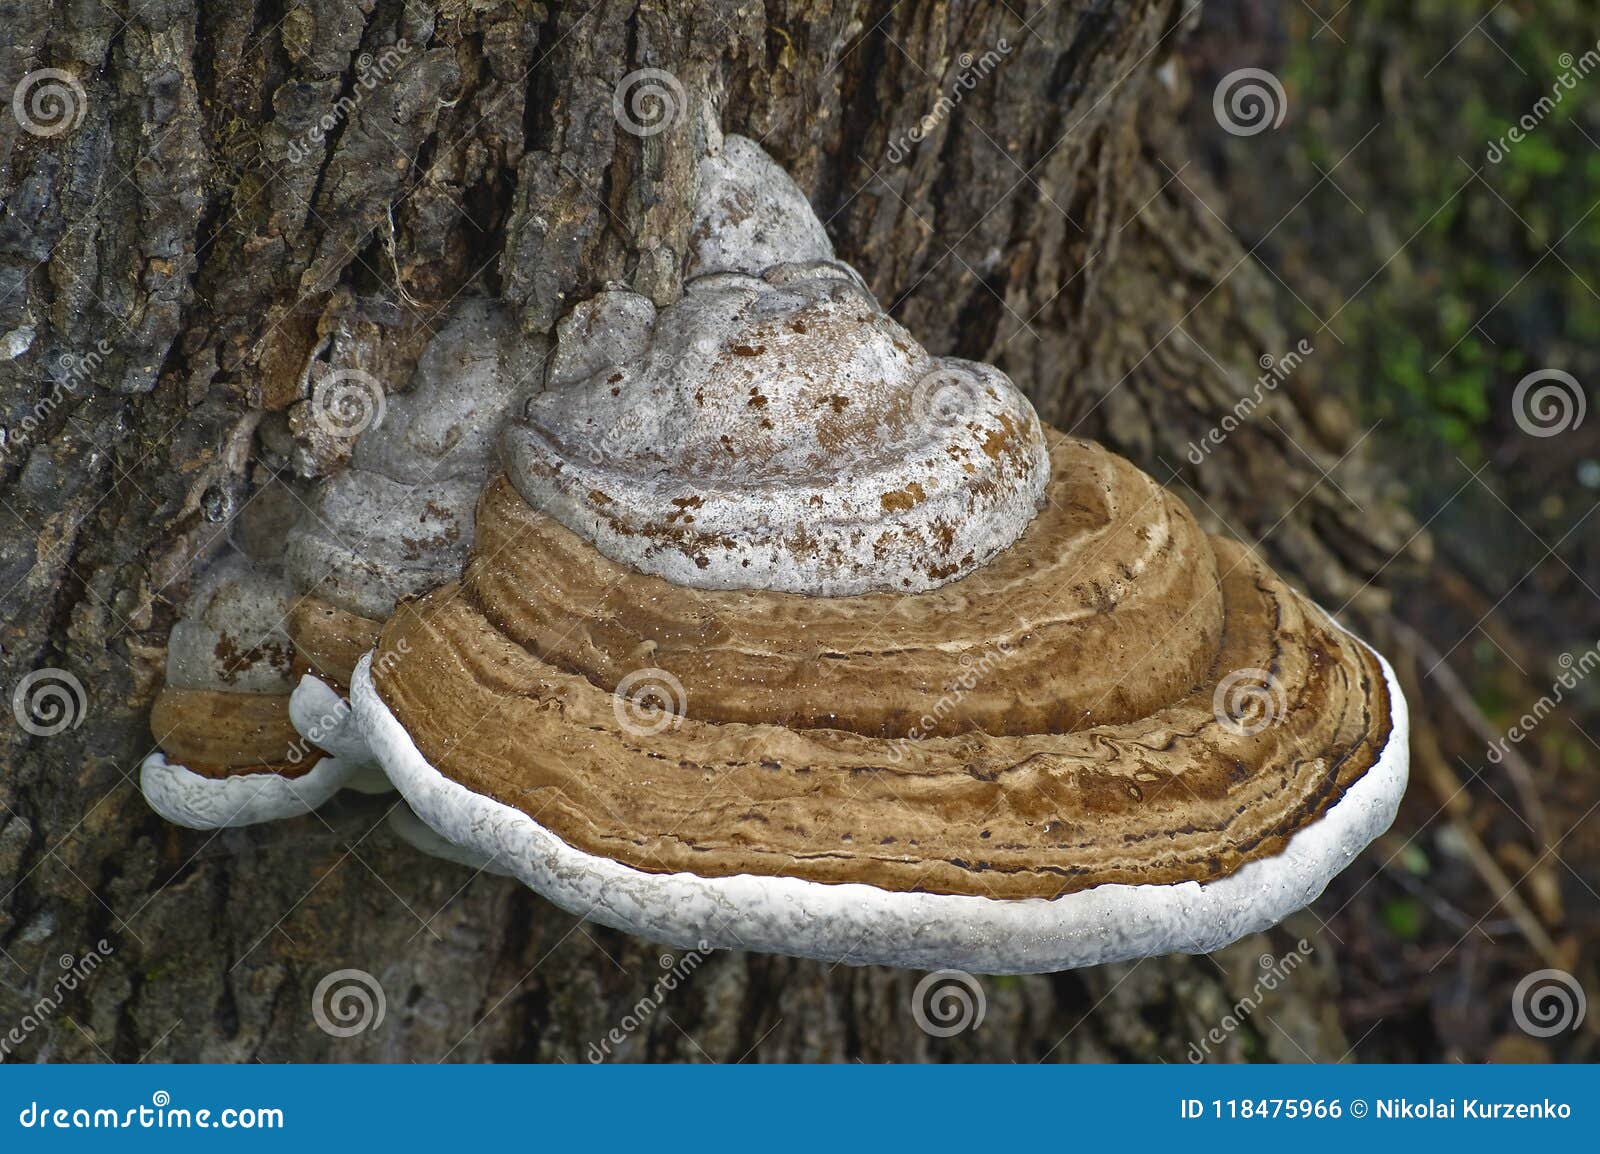 close up image of artistÃ¢â¬â¢s conk fungus.